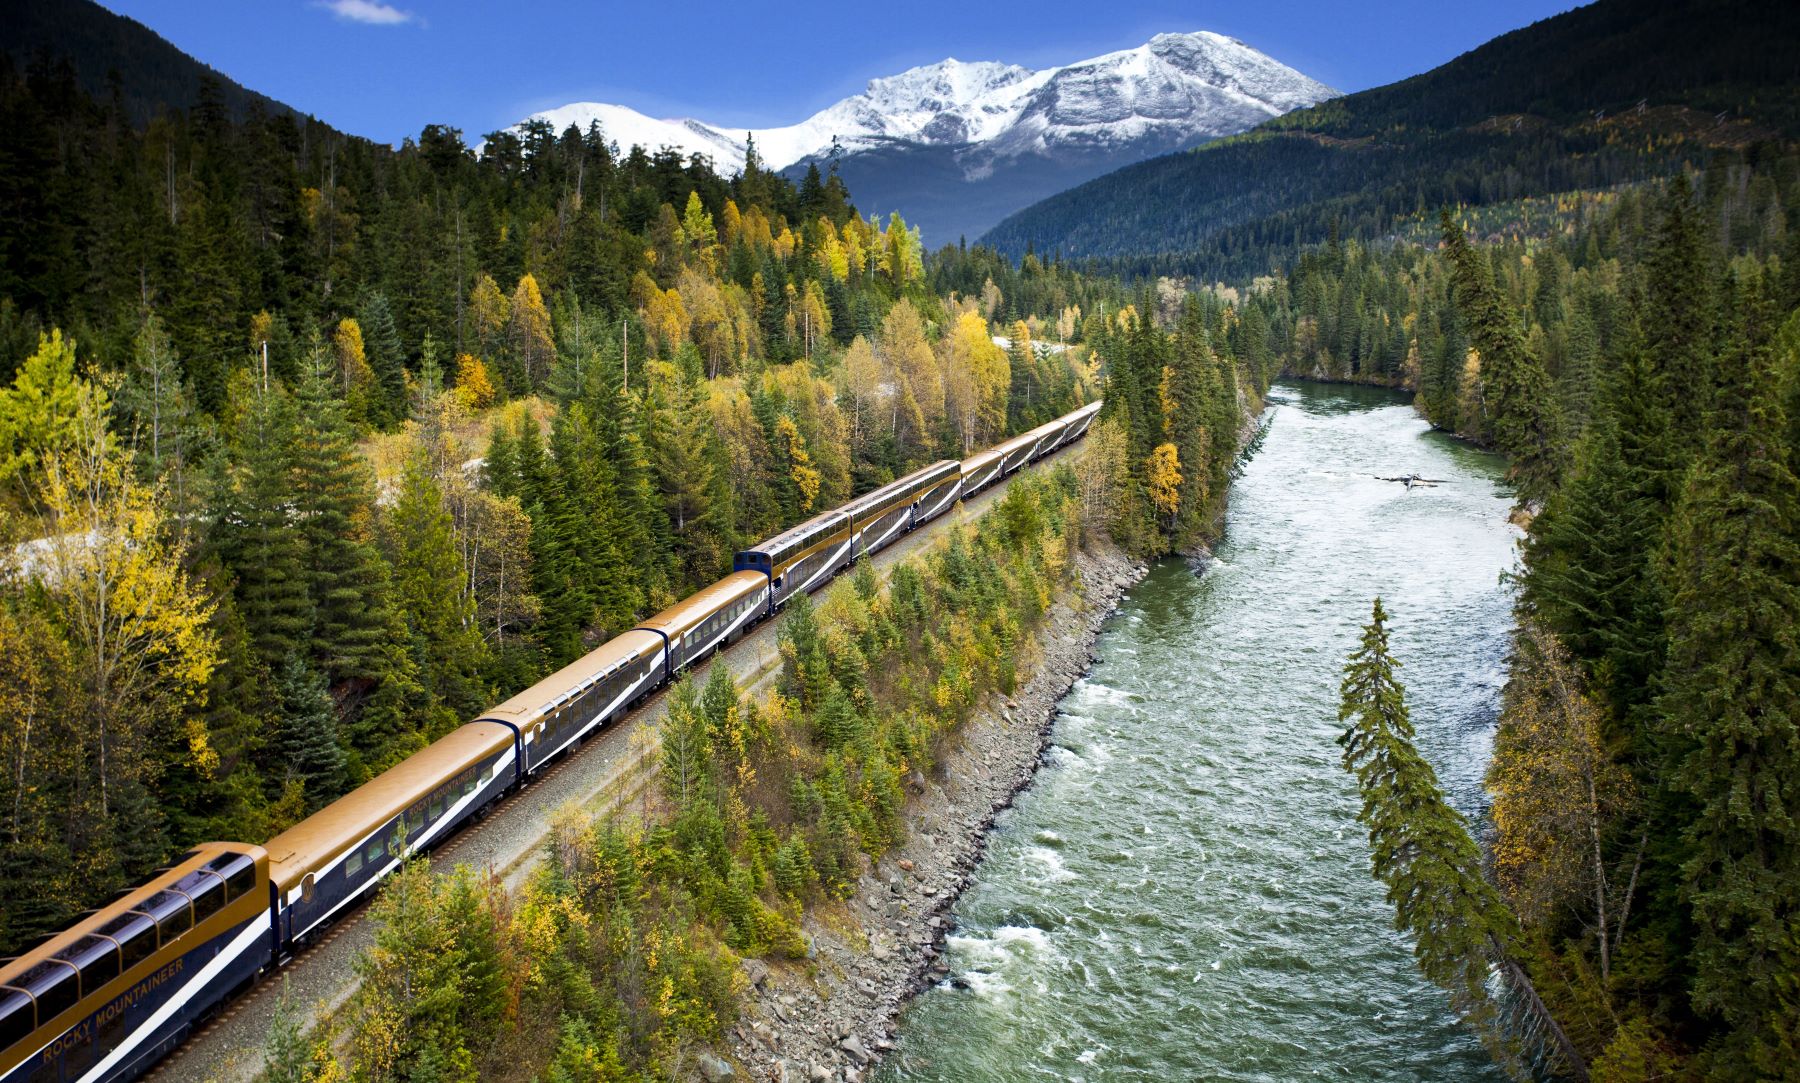 train trips through canadian rockies